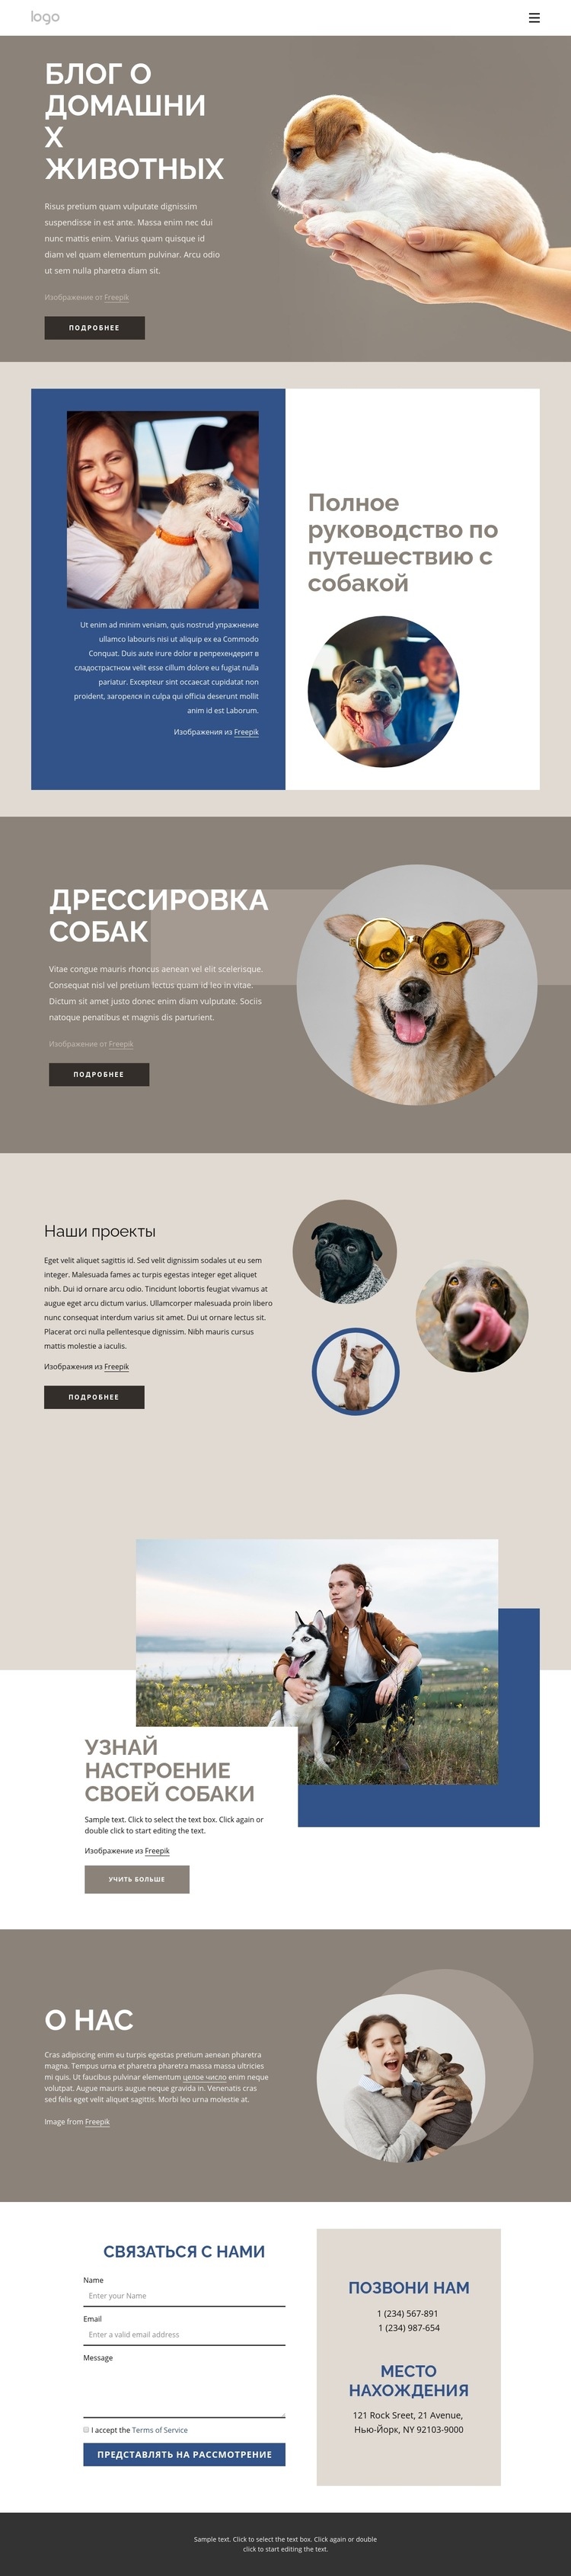 Блог о домашних животных HTML5 шаблон